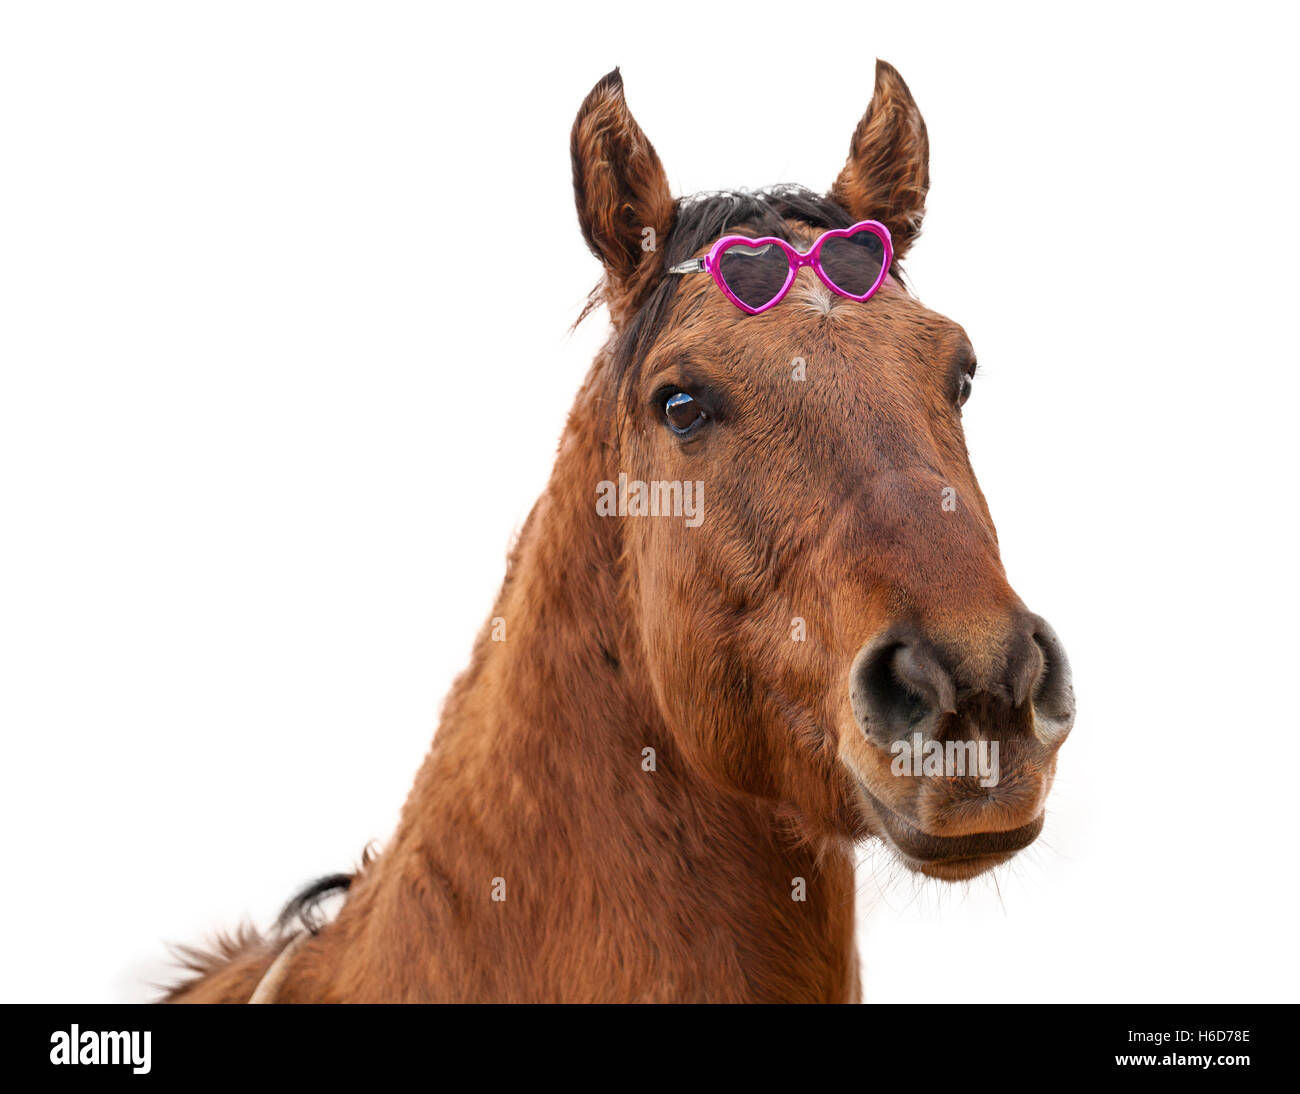 Isolated Horse Wearing Sunglasses Stock Photo